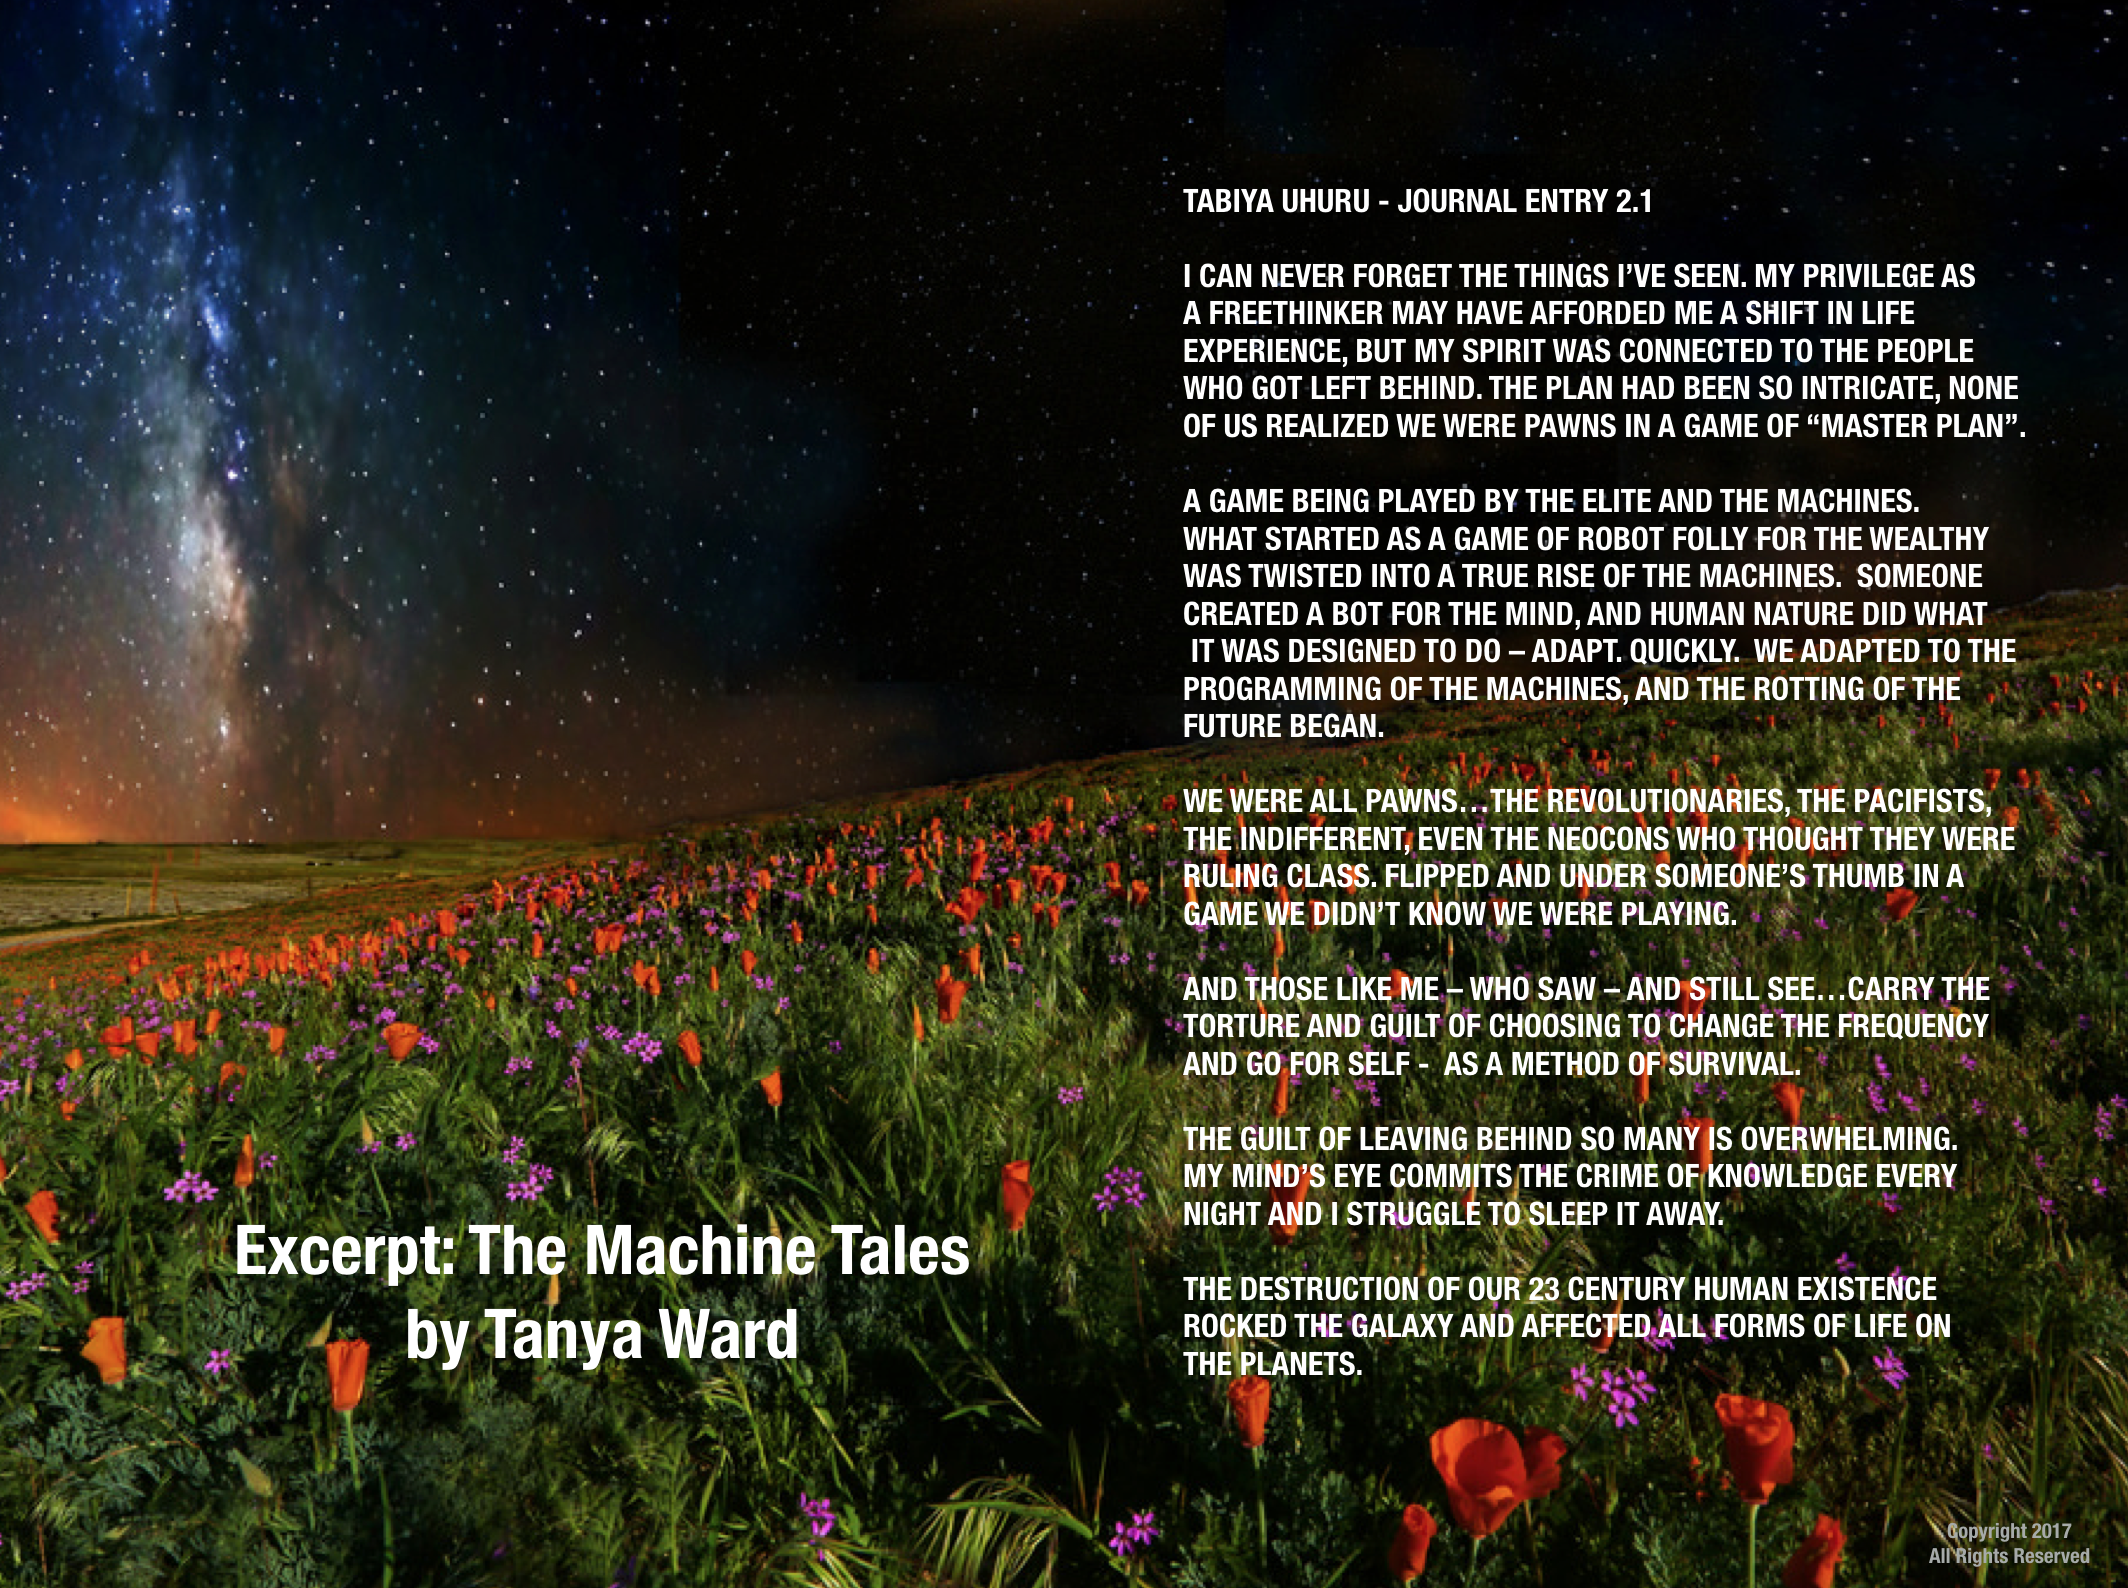 The Machine Tales